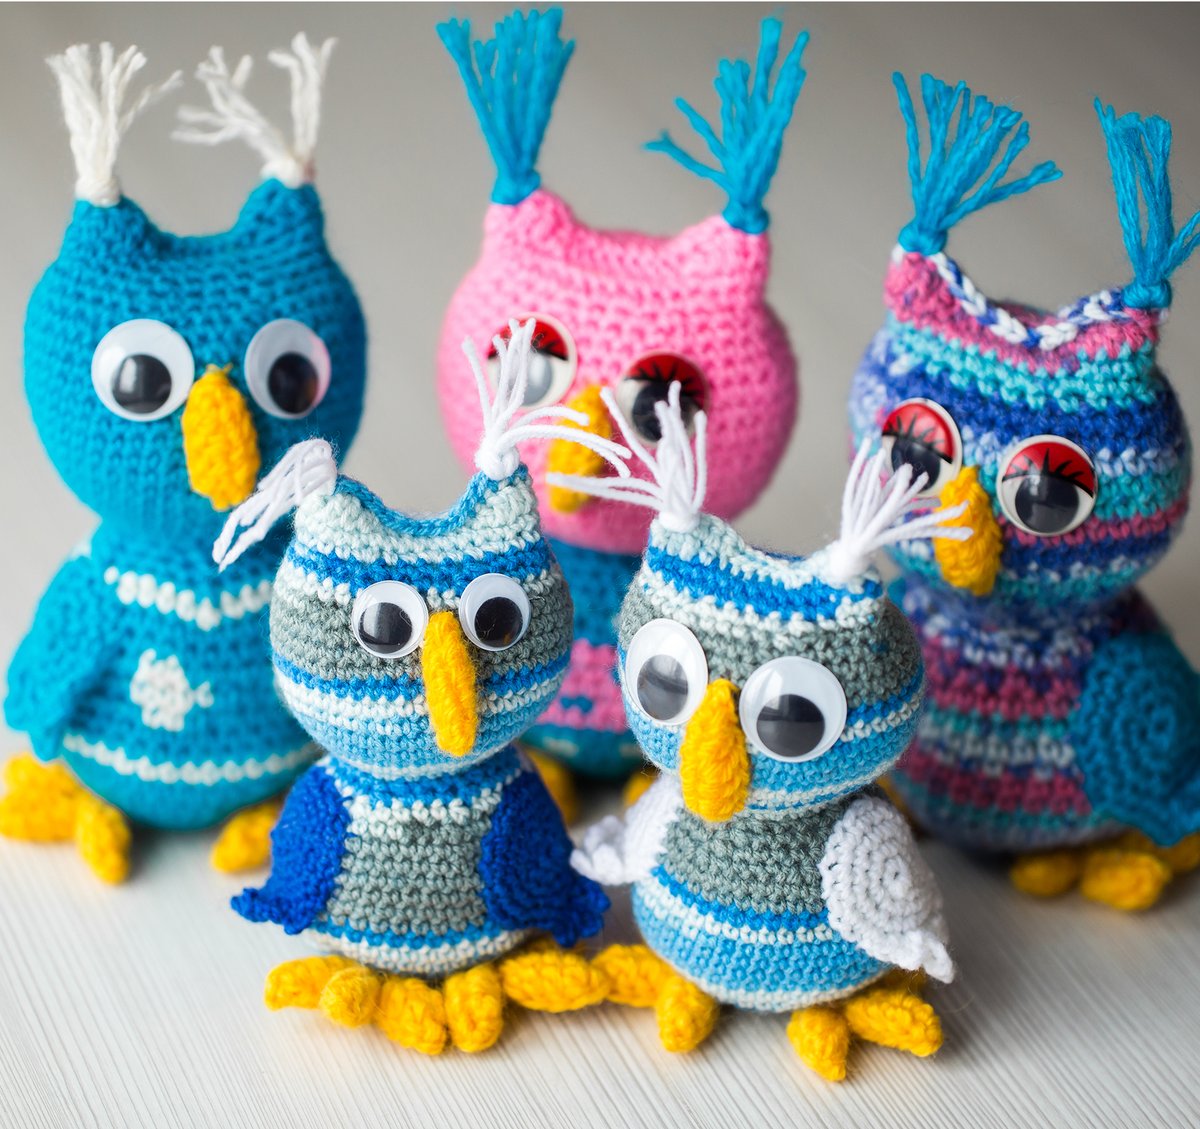 Craft a flock of colorful friends with ilauke wool yarn.

#ILAUKEyarn #crochet #ILAUKEcrochet #CrochetFun #Handcrafted #YarnLovers #CrochetAnimals #CraftingJoy #YarnMagic #CrochetCommunity #CreativeHands